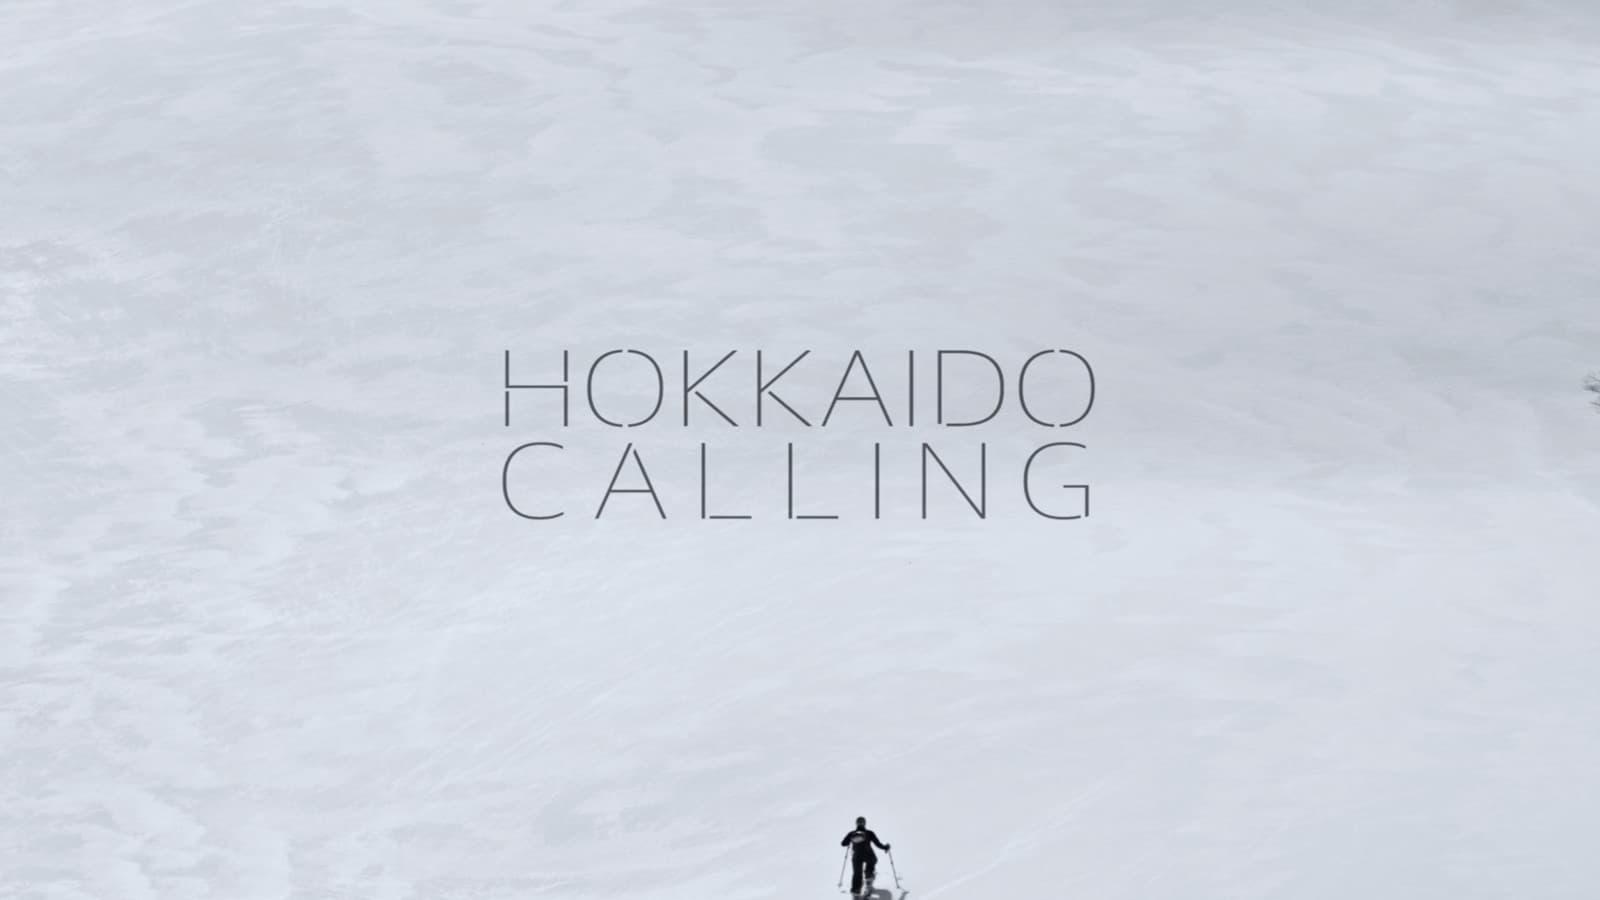 Hokkaido Calling backdrop